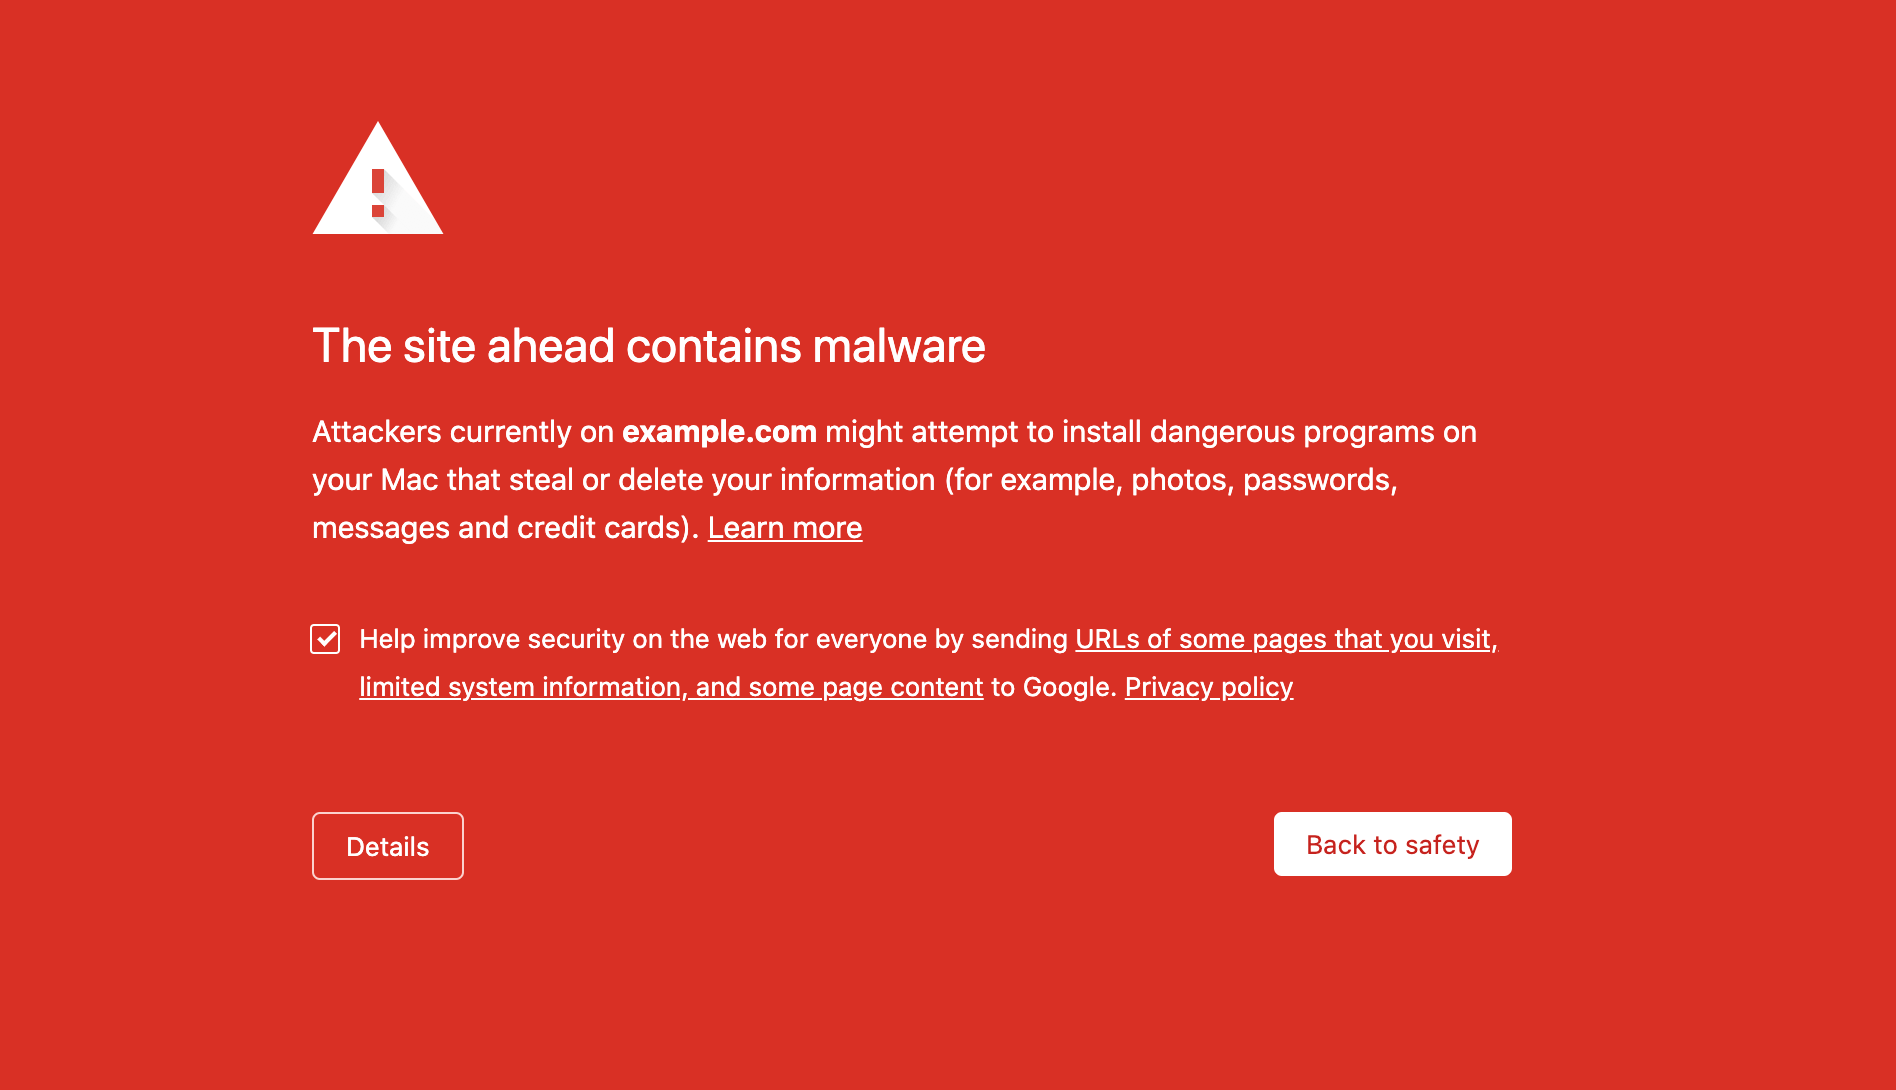 A blacklist malware warning in Google Chrome.